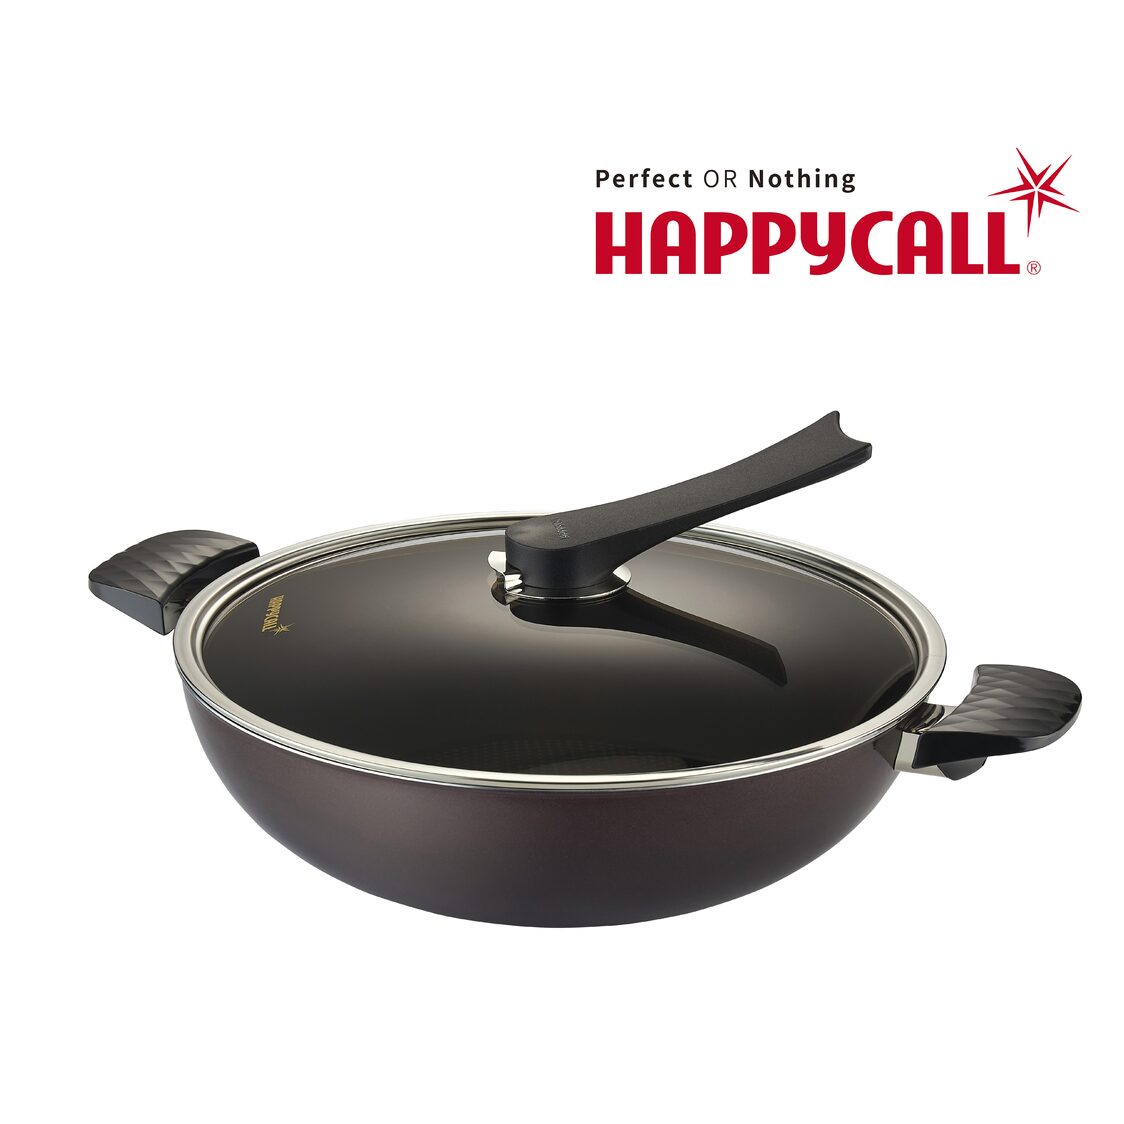 Happycall Pot Holders - Happycall USA